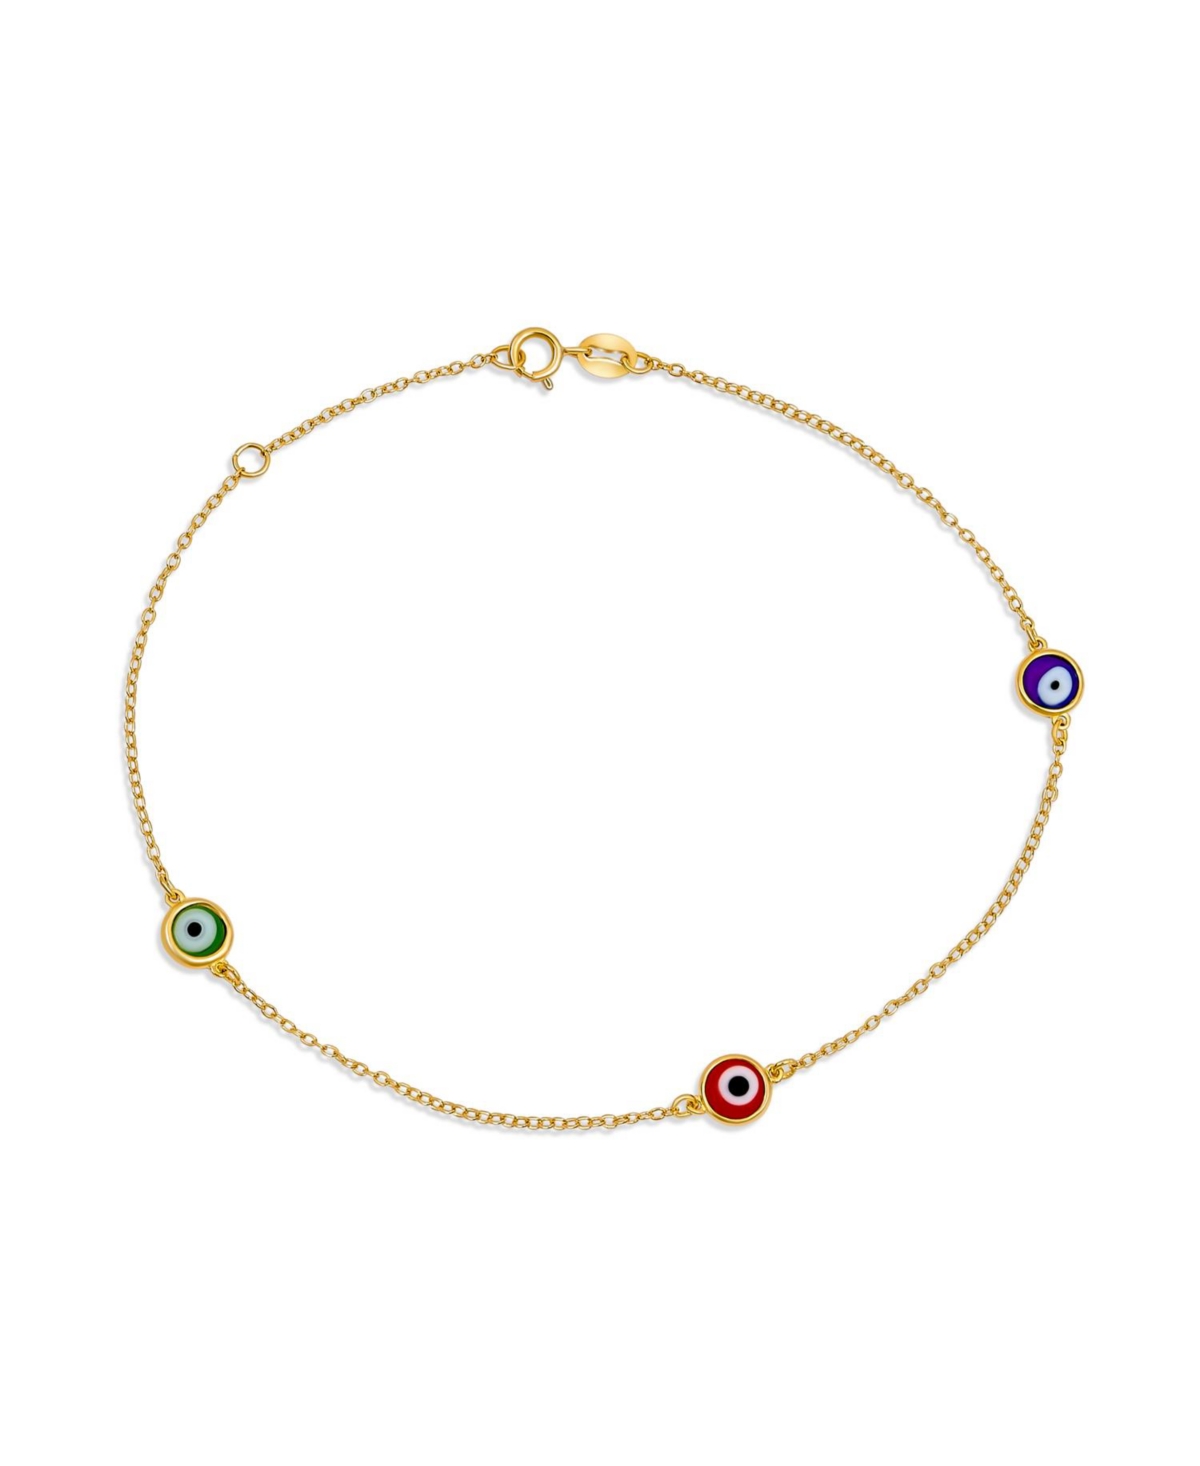 Minimalist Delicate Gold Plated Evil Eye Anklet With Adjustable Chain - Delicate Multi Color Bracelet For Women Teens, Minimalist Design,.925 Sterling